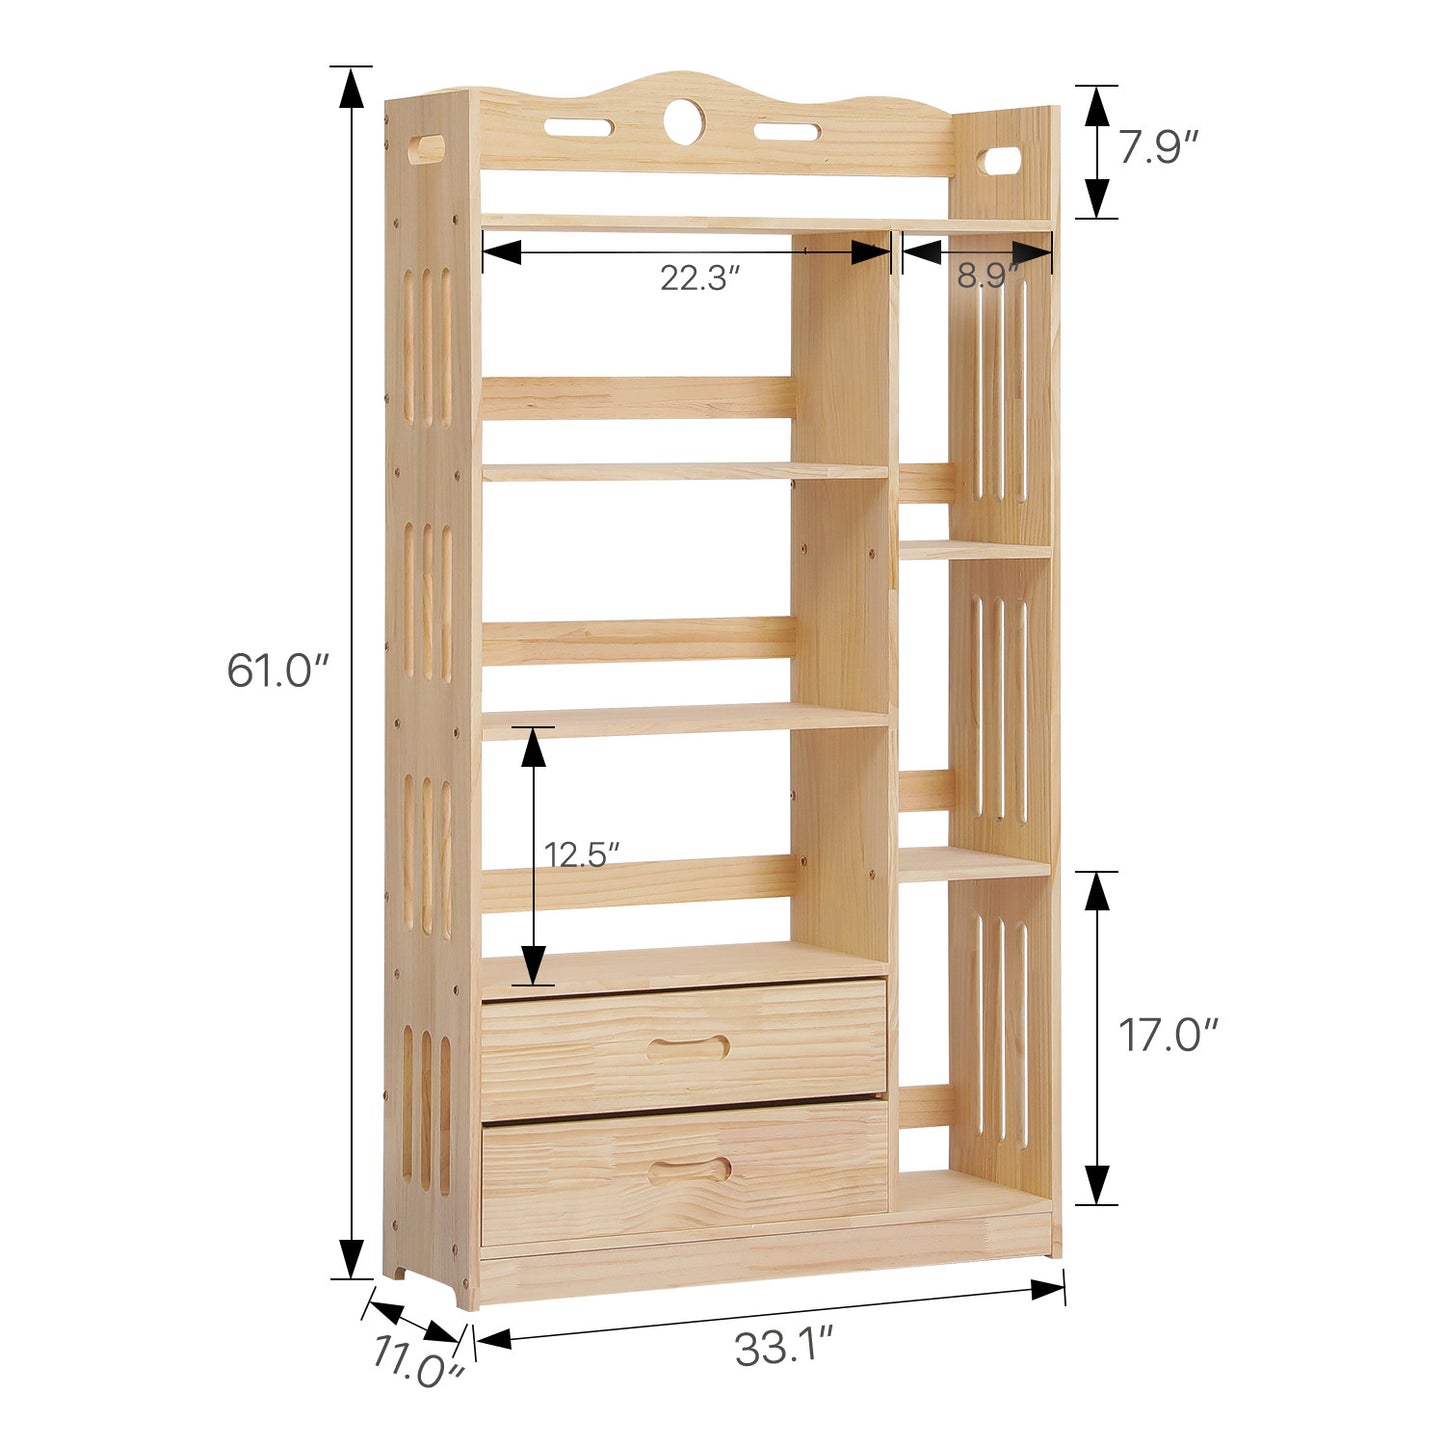 Wooden Display Storage Organizer - 5 Tier - with Drawer - 33" - Natural